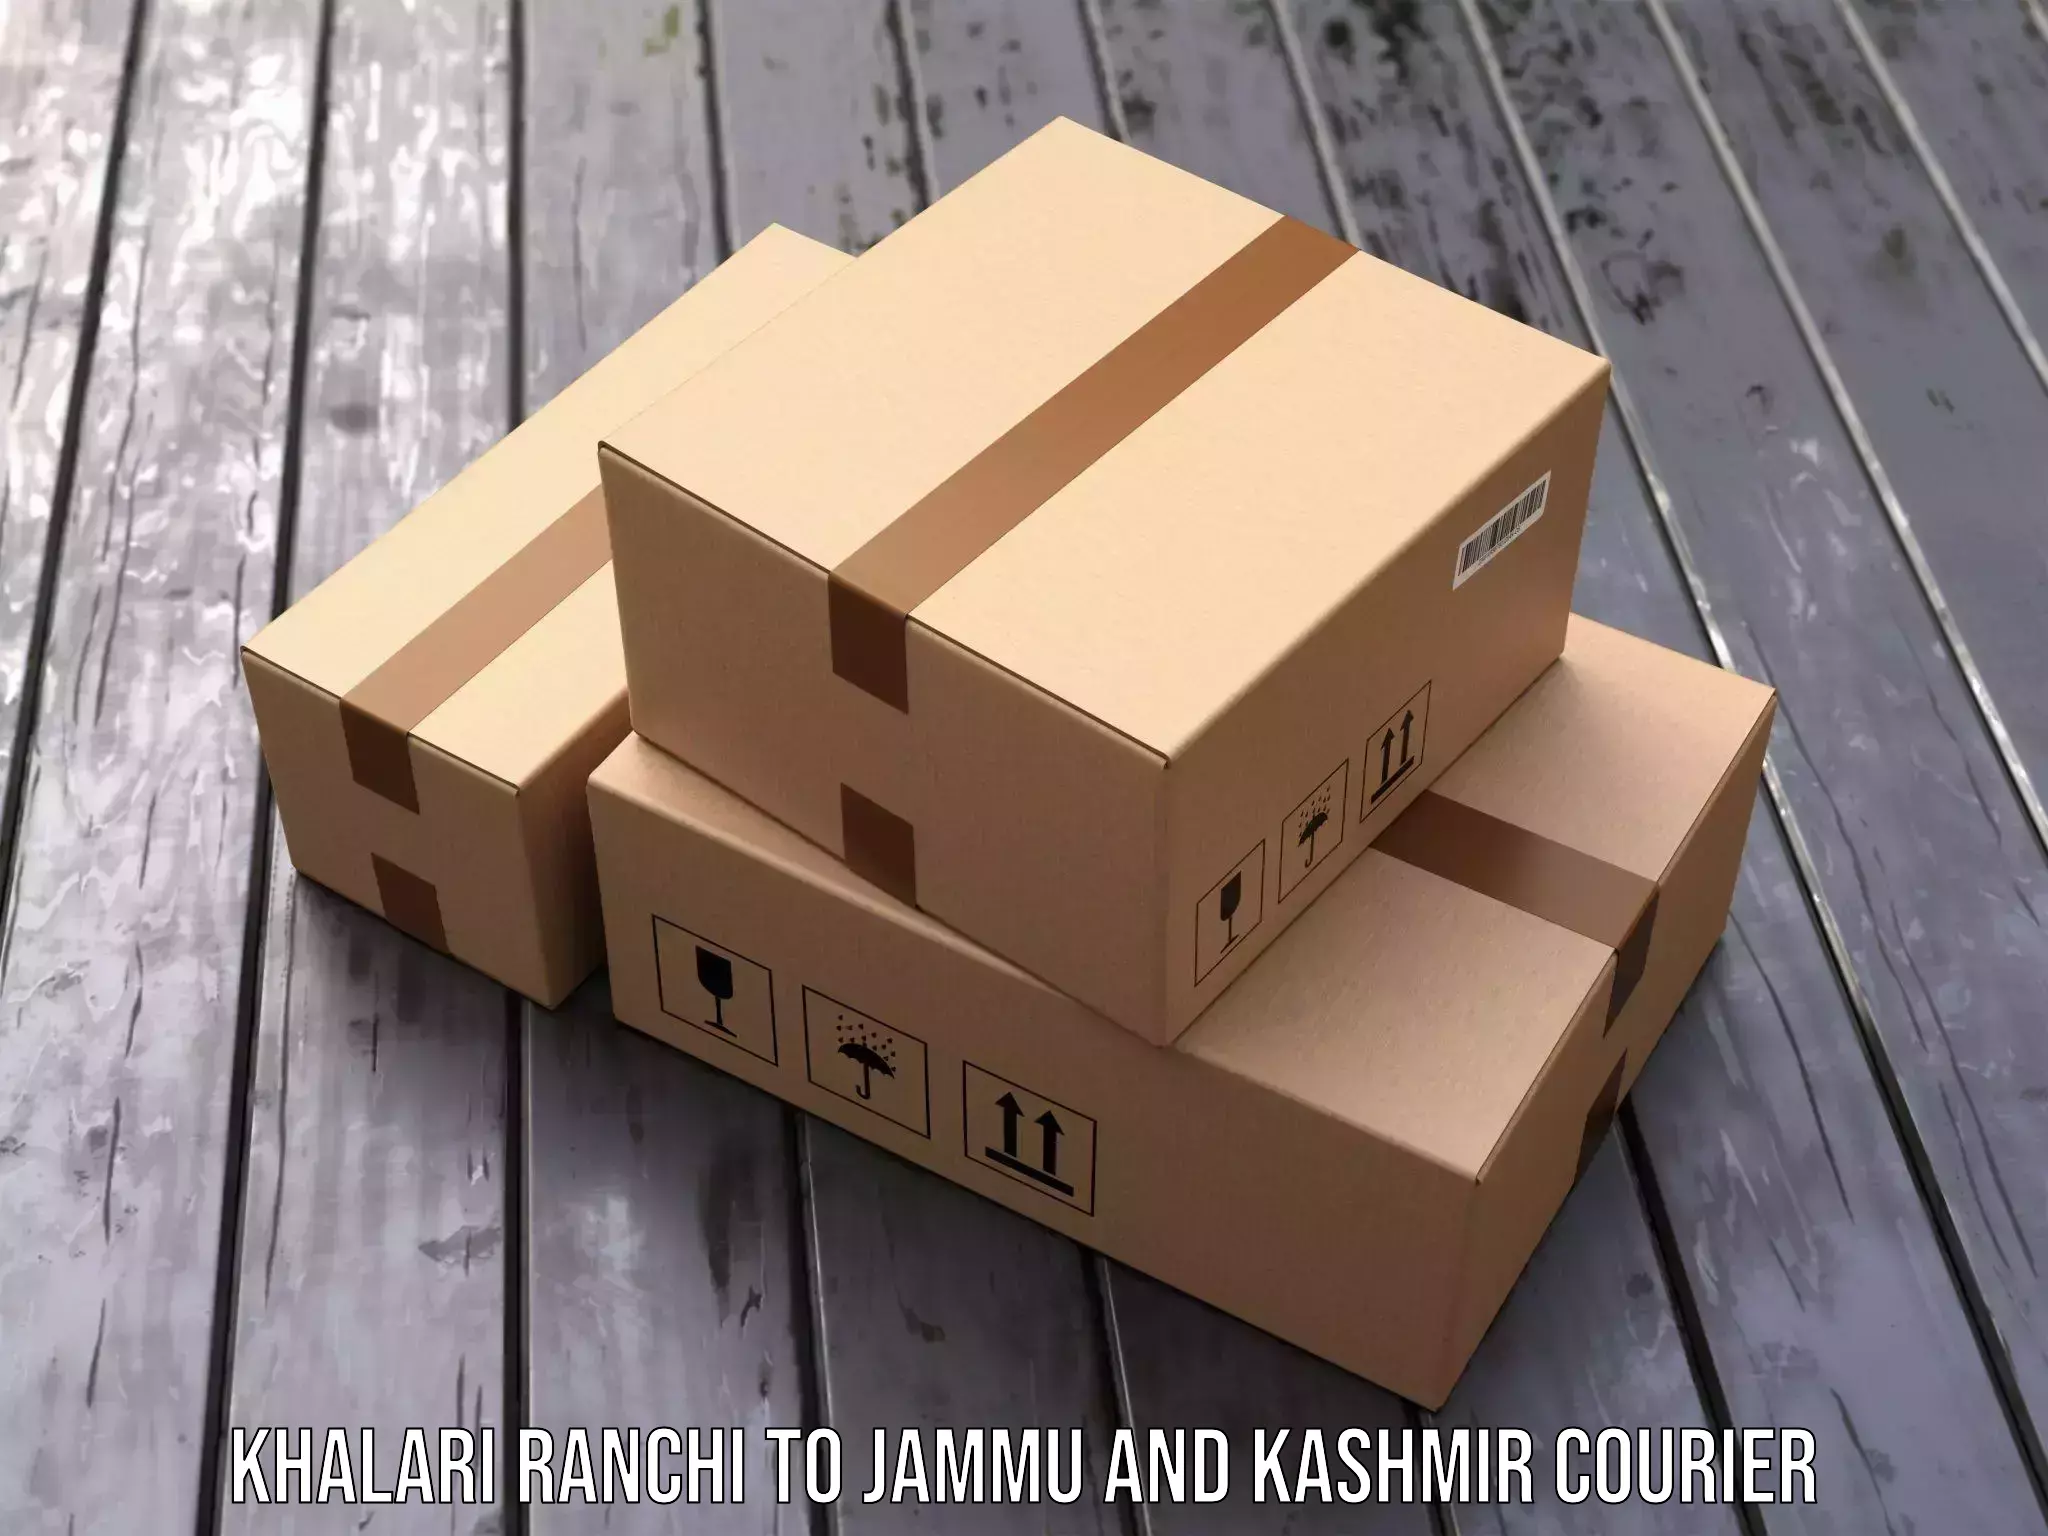 Parcel delivery automation Khalari Ranchi to Katra